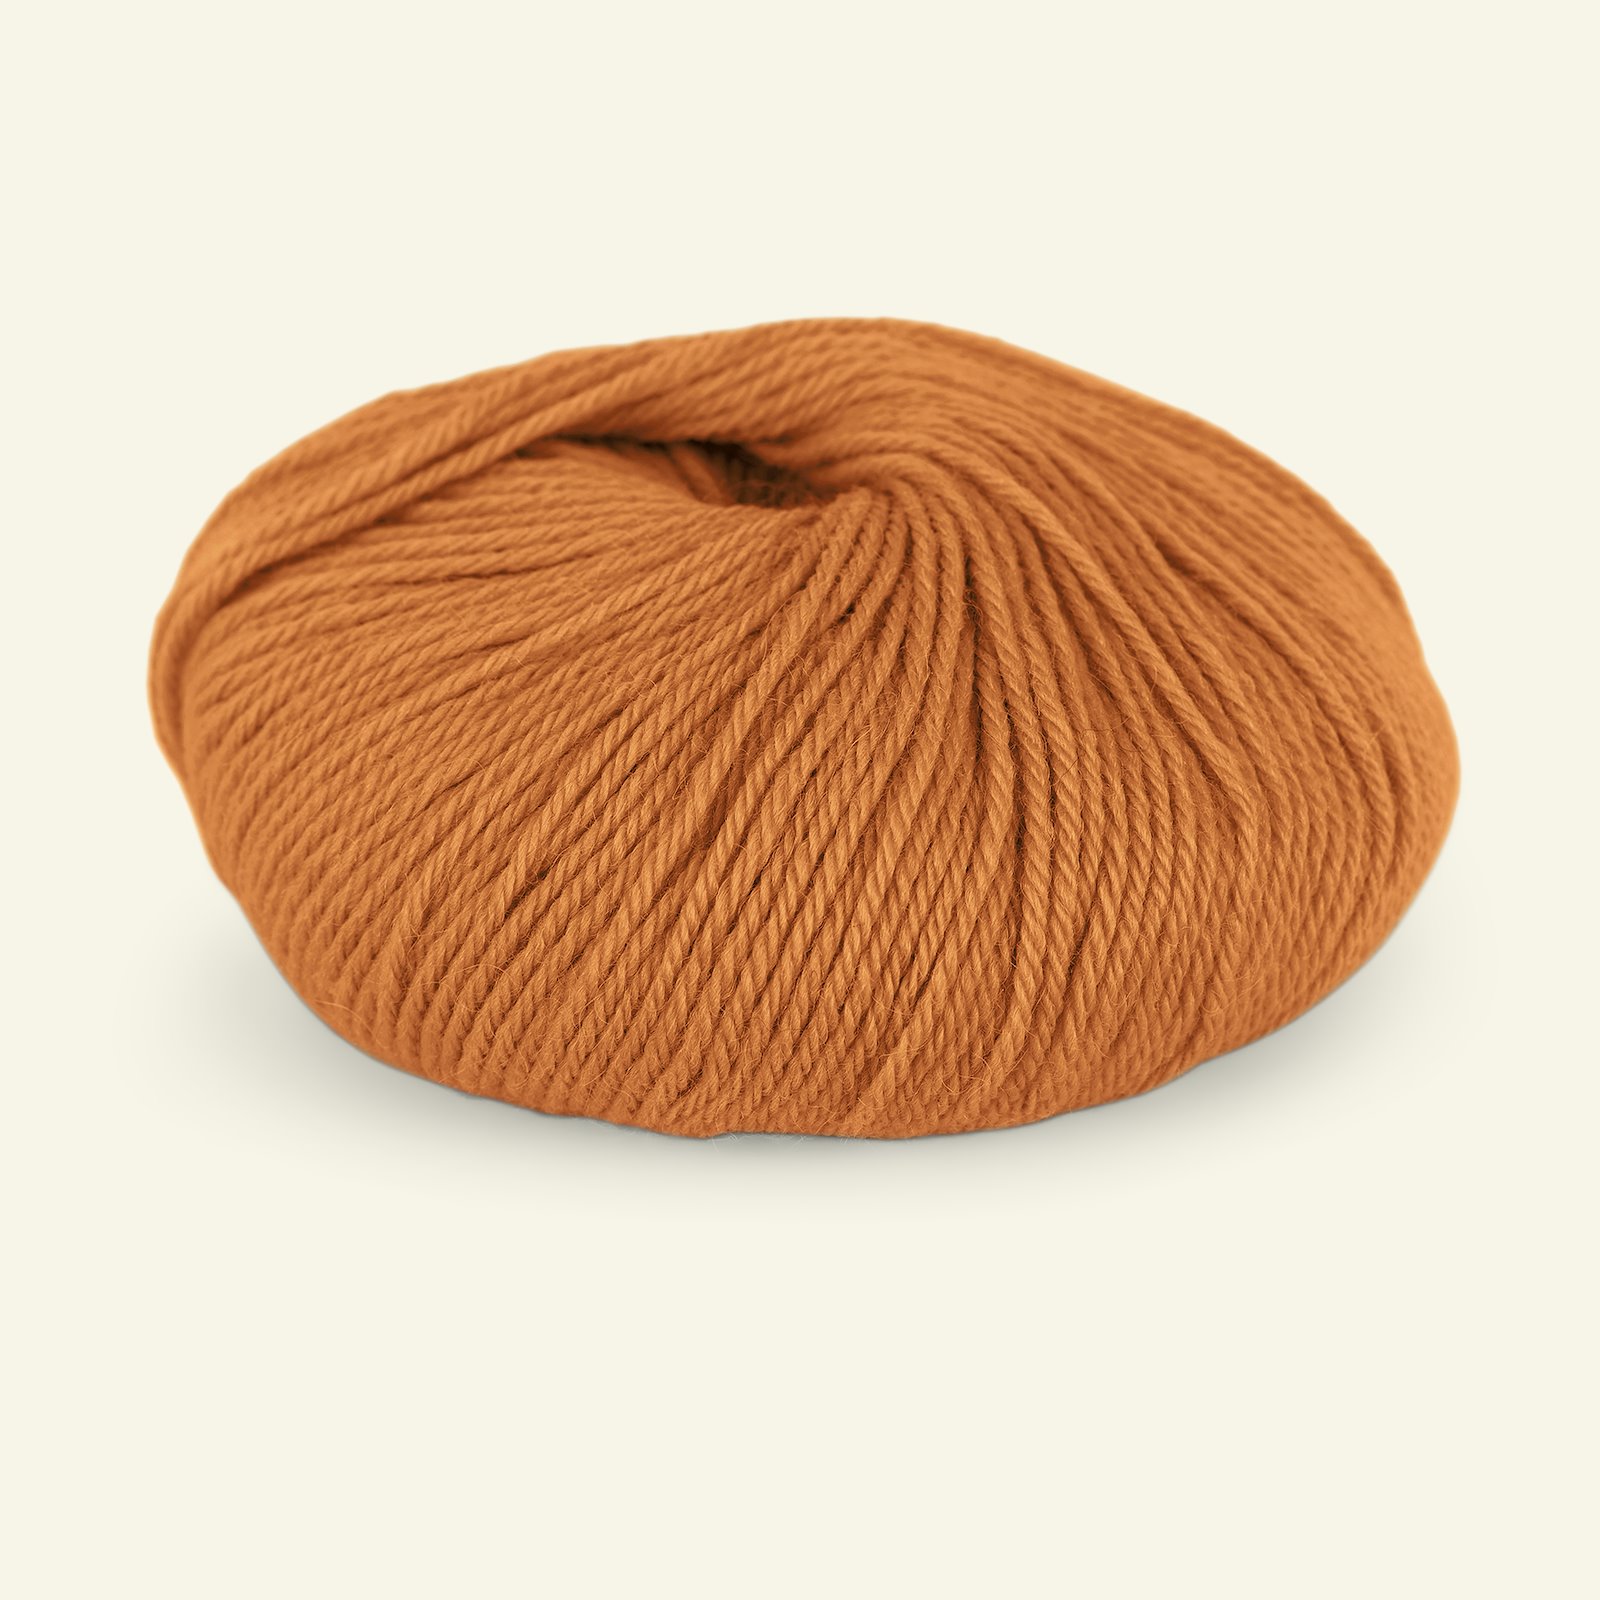 Du Store Alpakka, alpaca merino mixed yarn "Sterk", saffron yellow (858) 90000681_pack_b